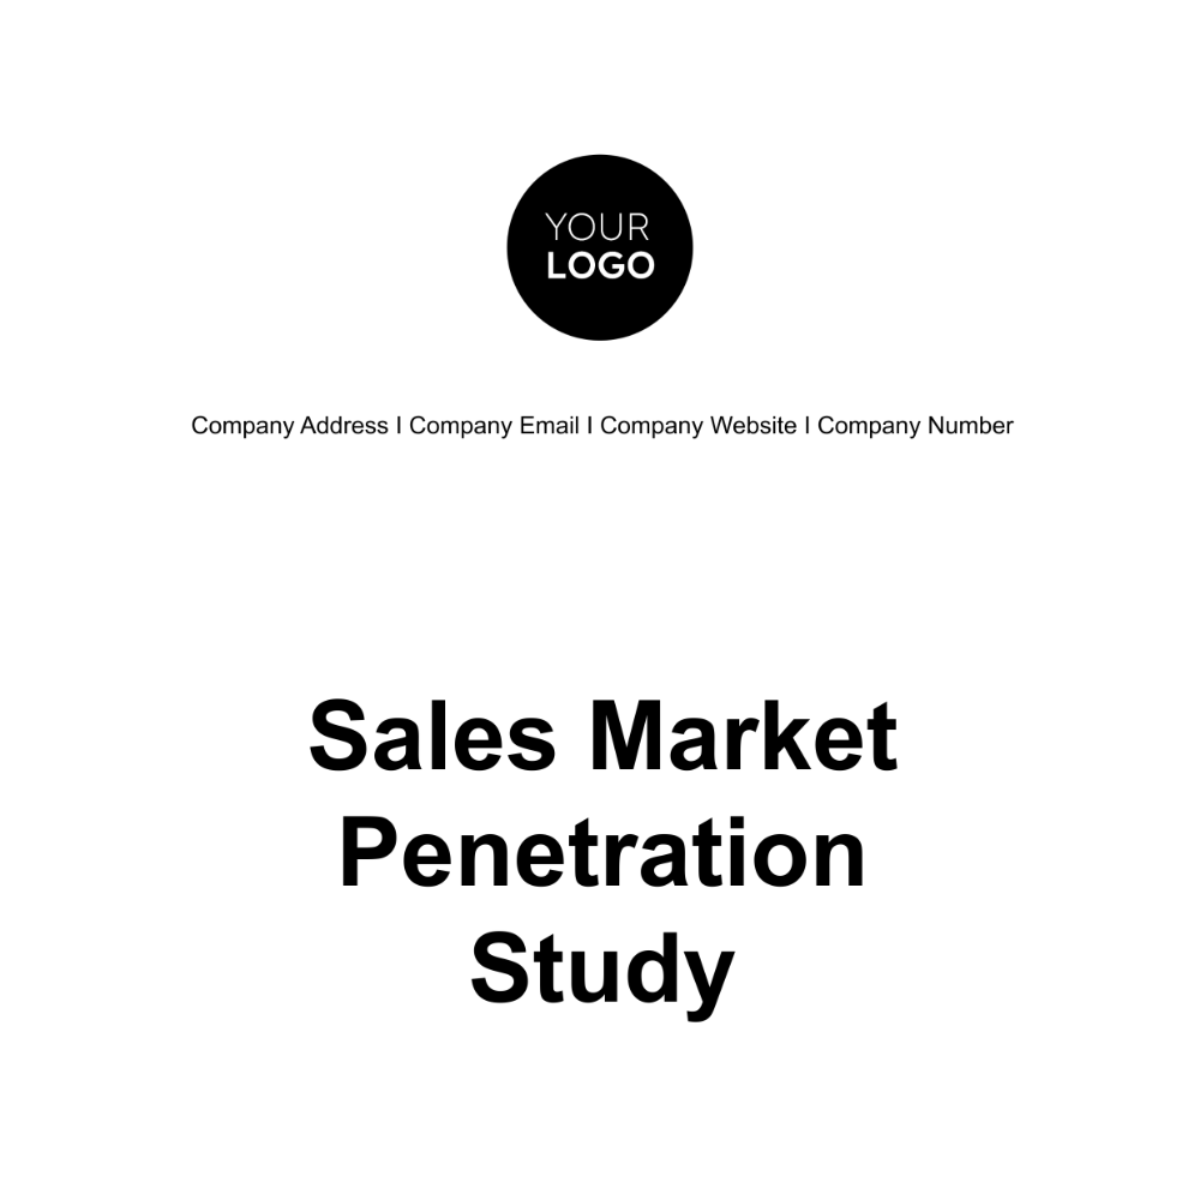 Sales Market Penetration Study Template